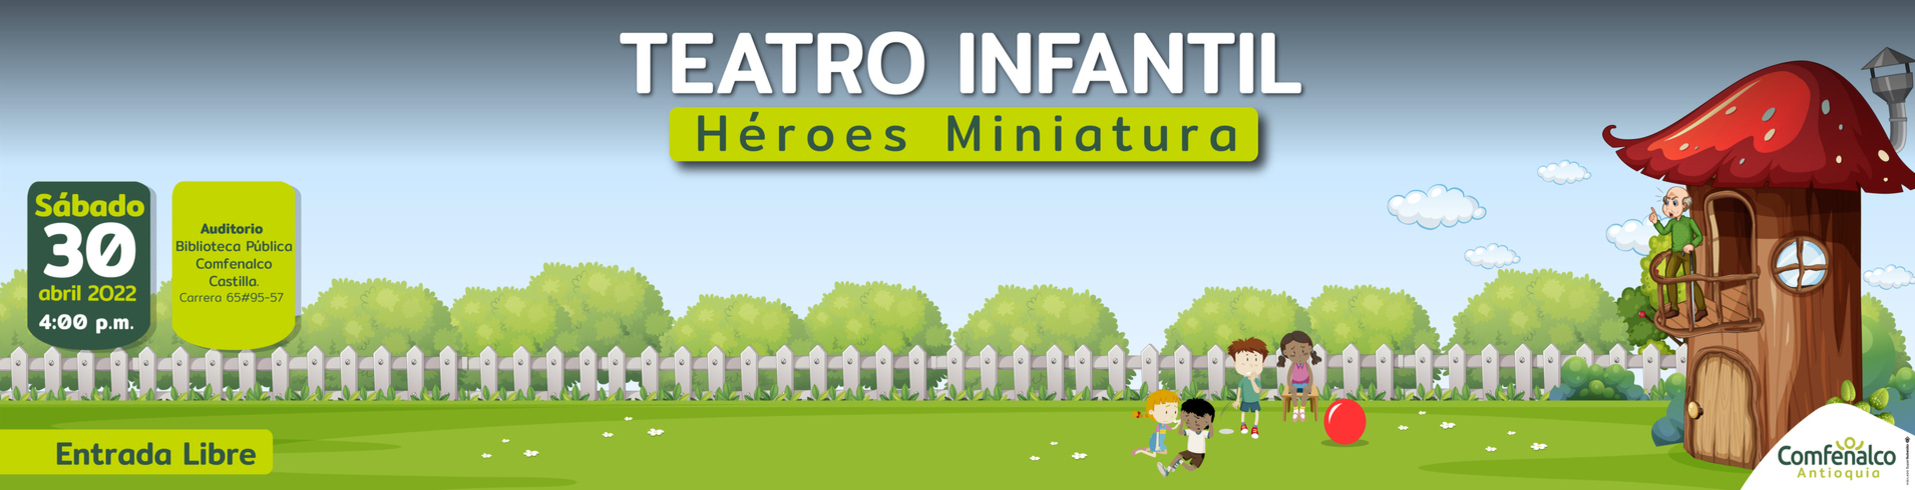 Teatro Infantil: Héroes en miniatura